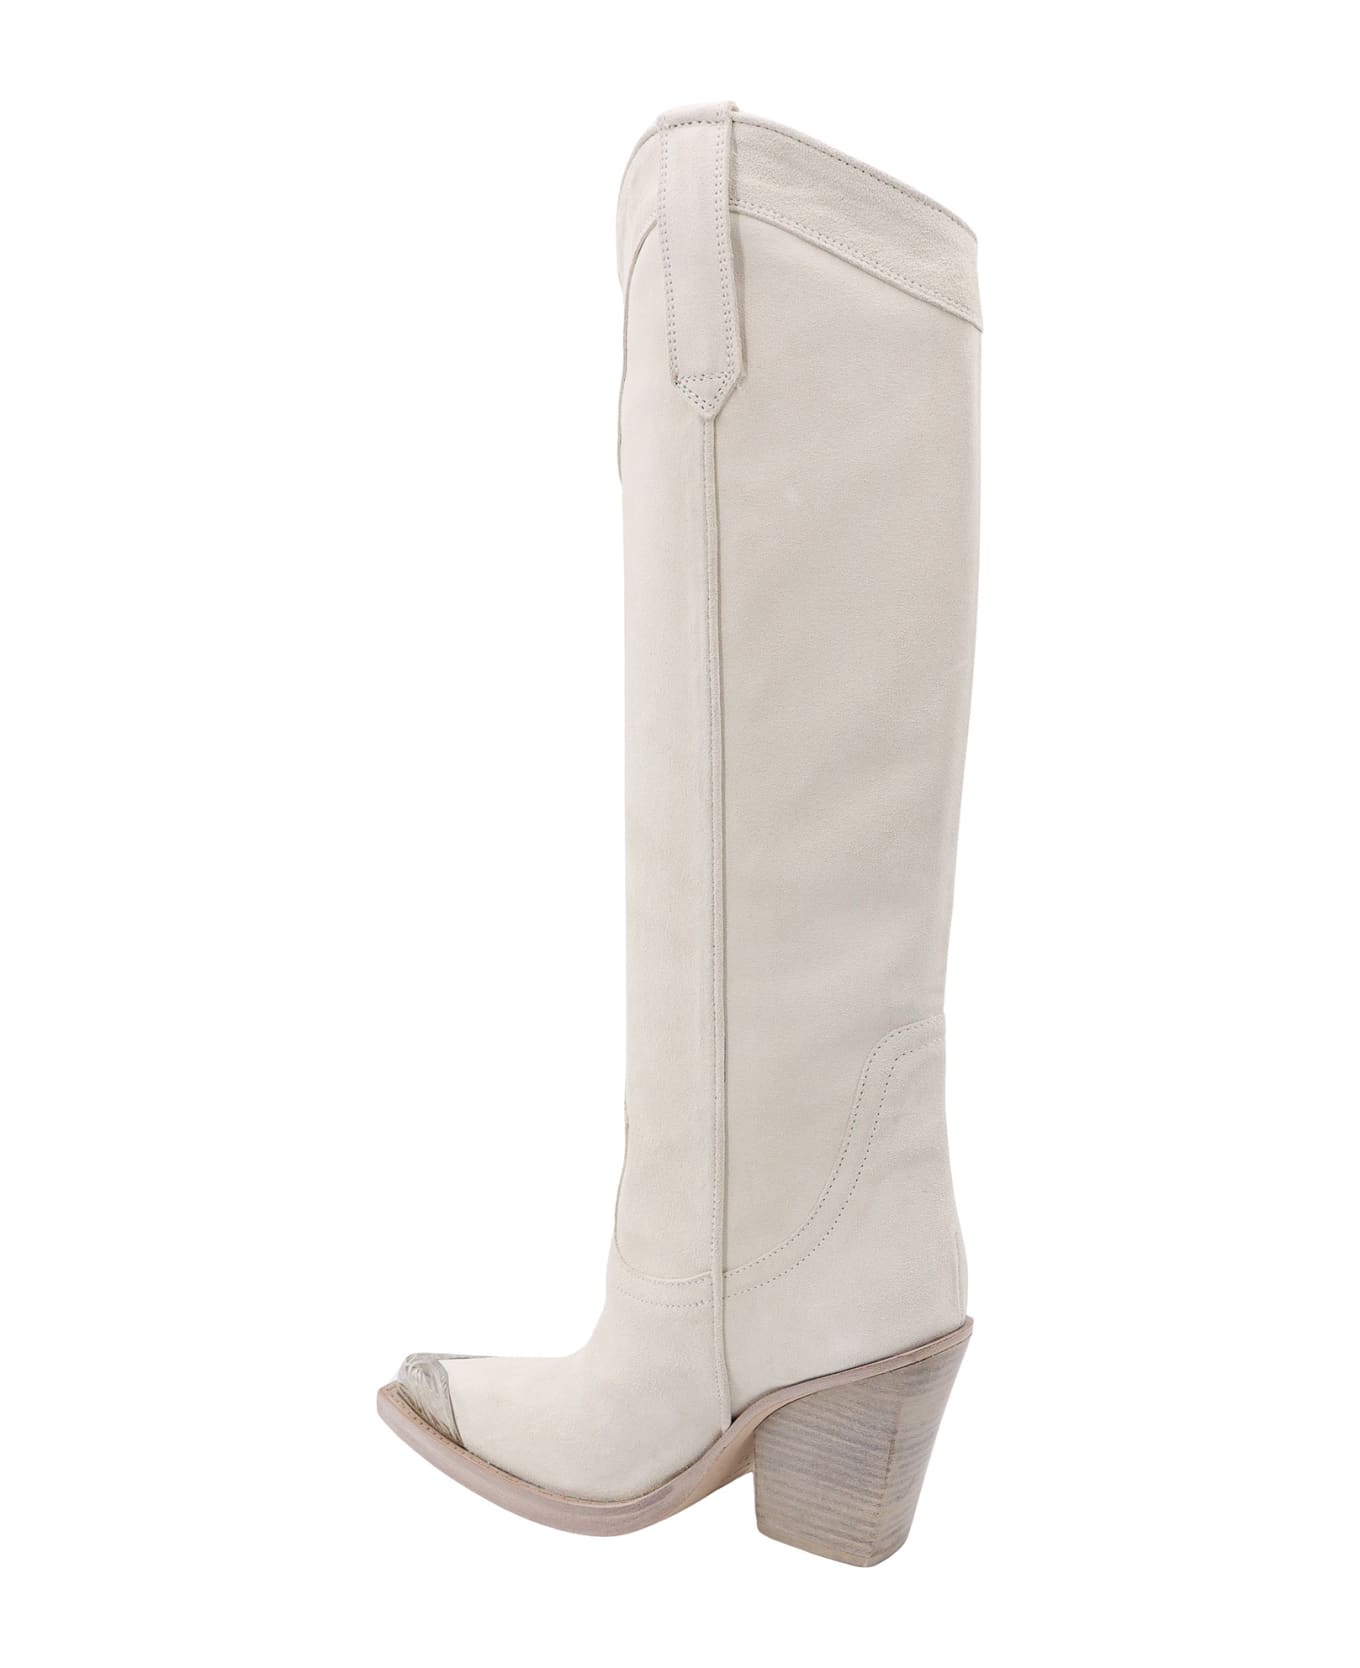 Paris Texas El Dorado Boots - White